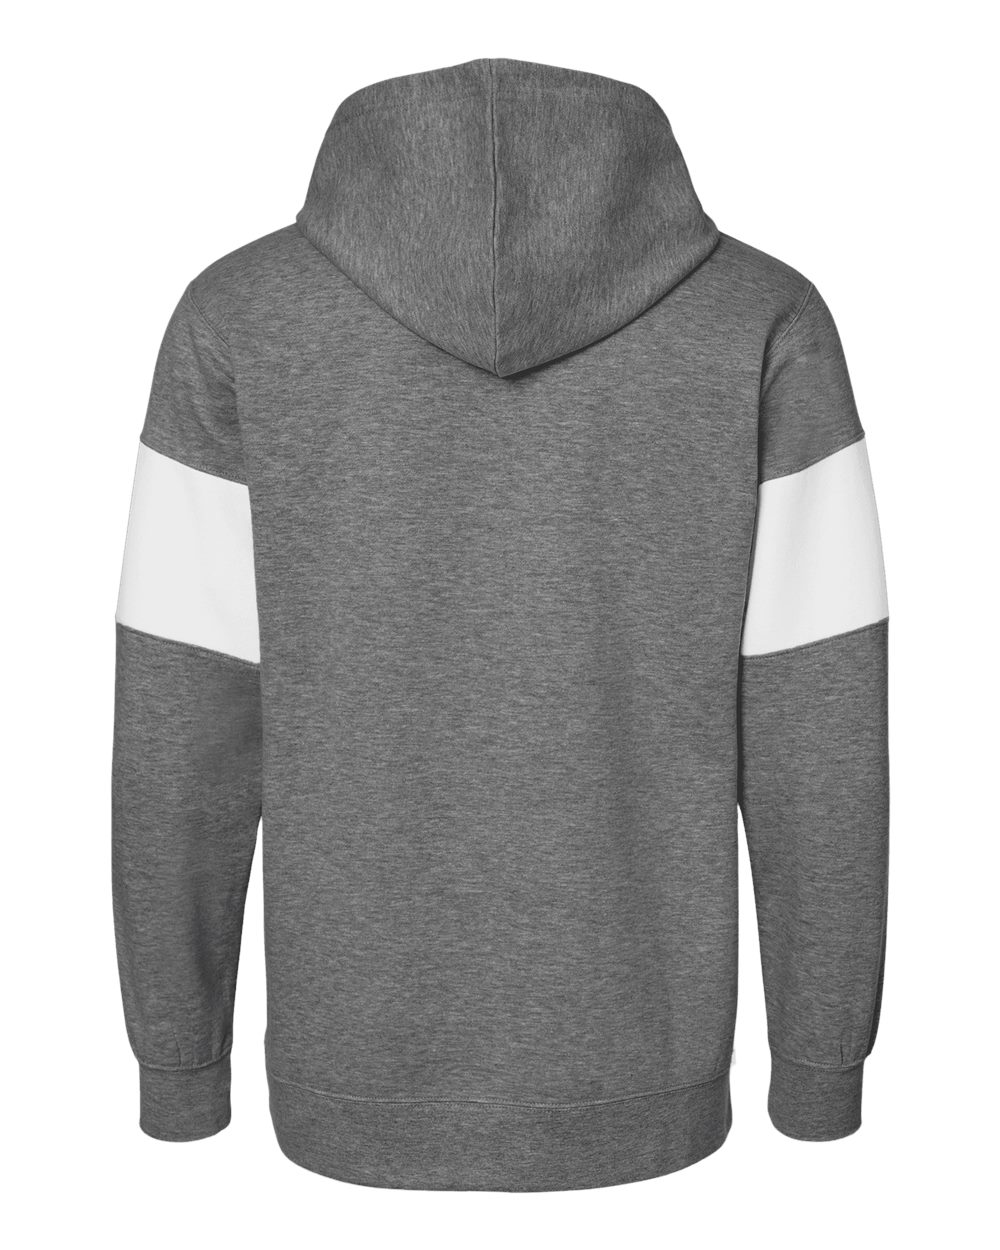 Classic Fleece Colorblocked Hooded Sweatshirt - 22709-MV Sport